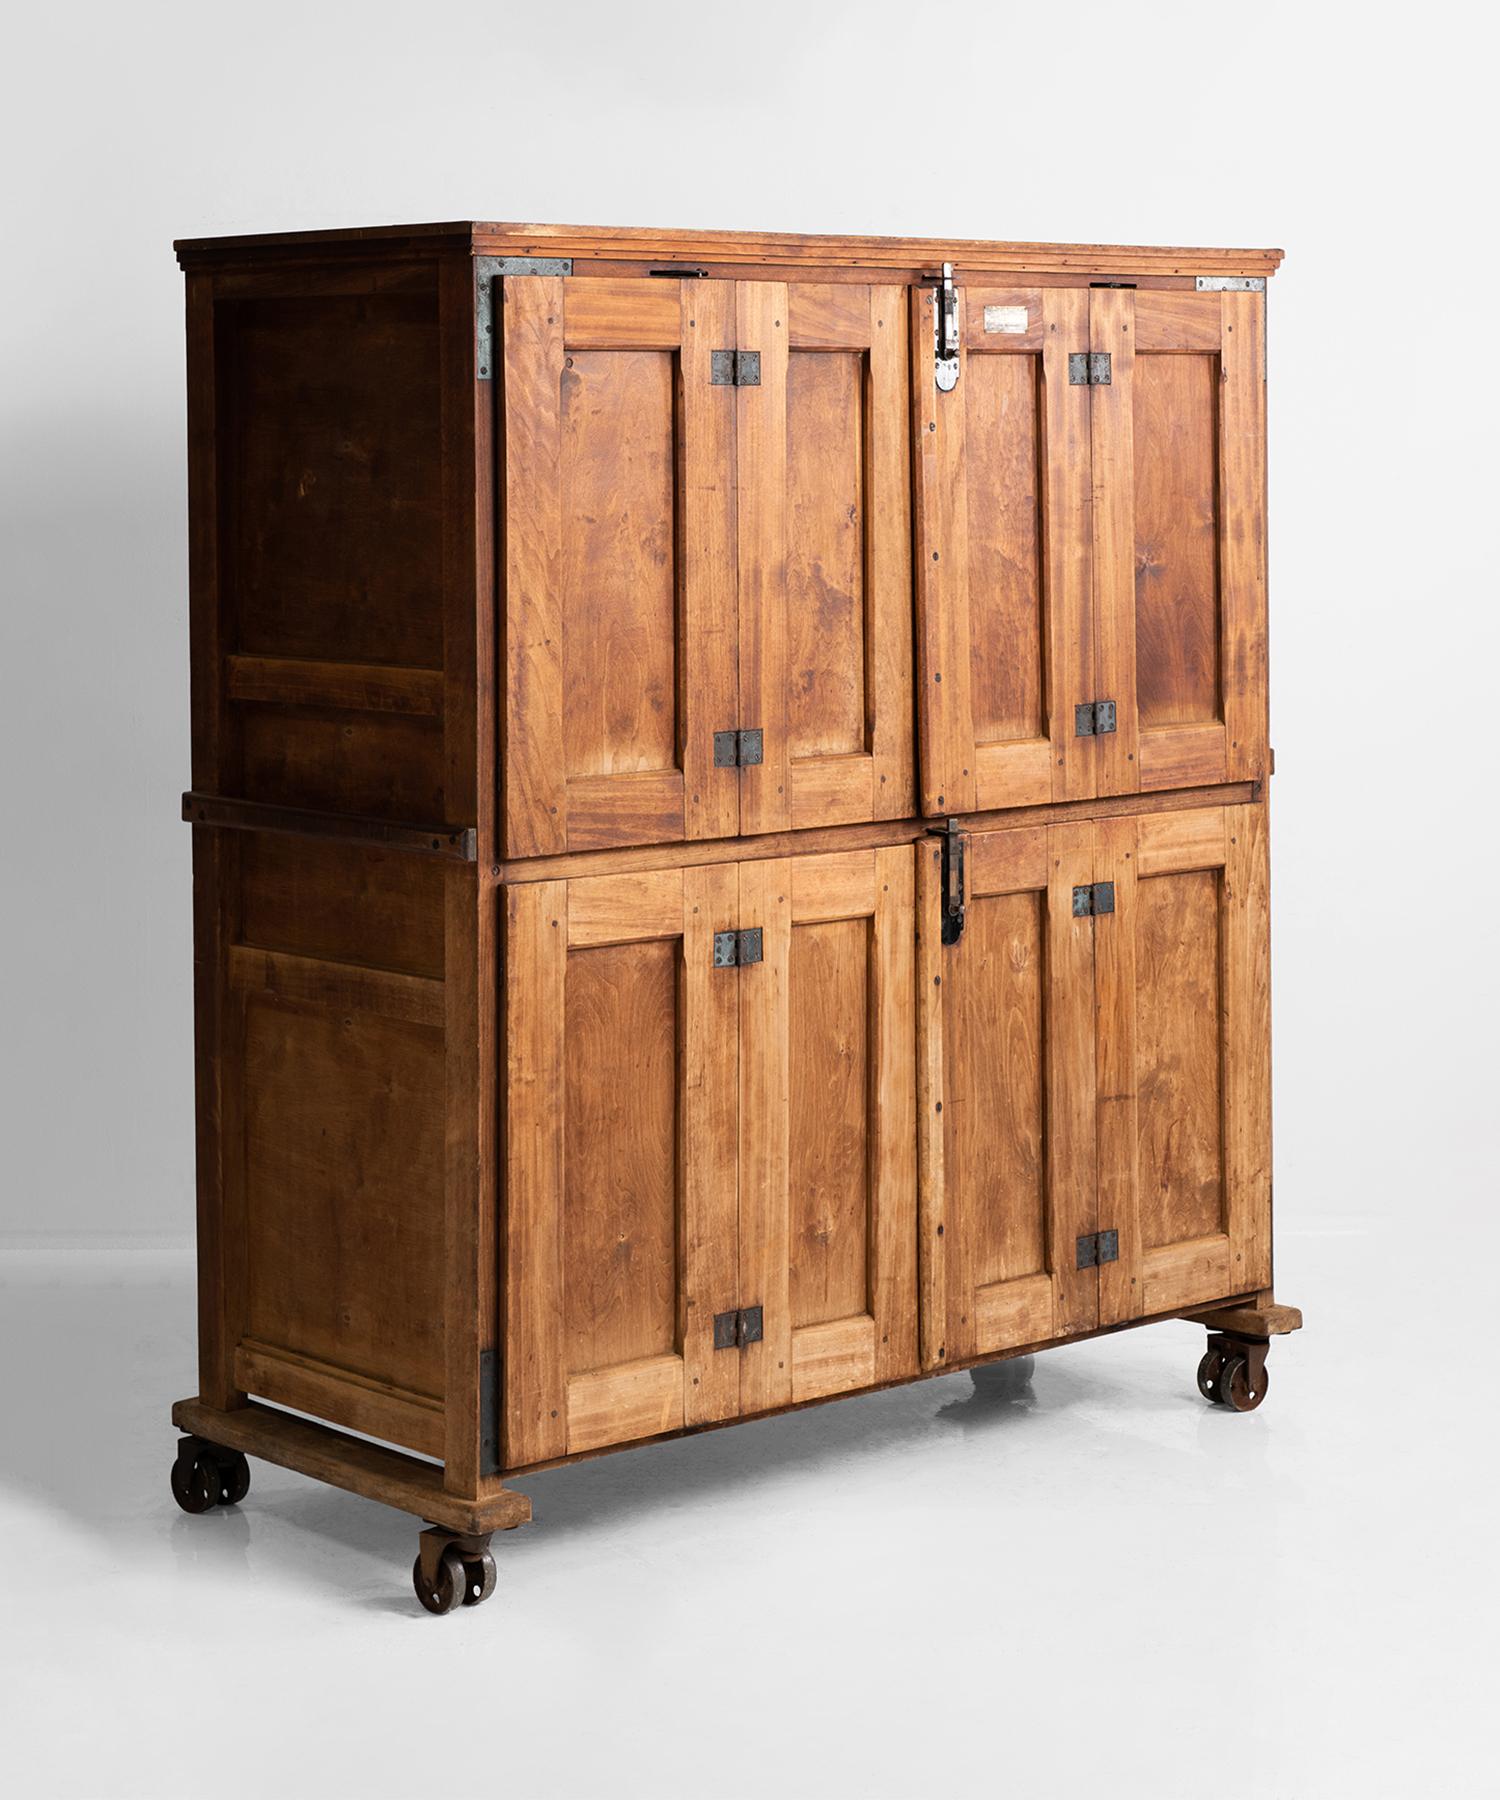 Wonderful four door cabinet with pullout cooling racks on original castors.